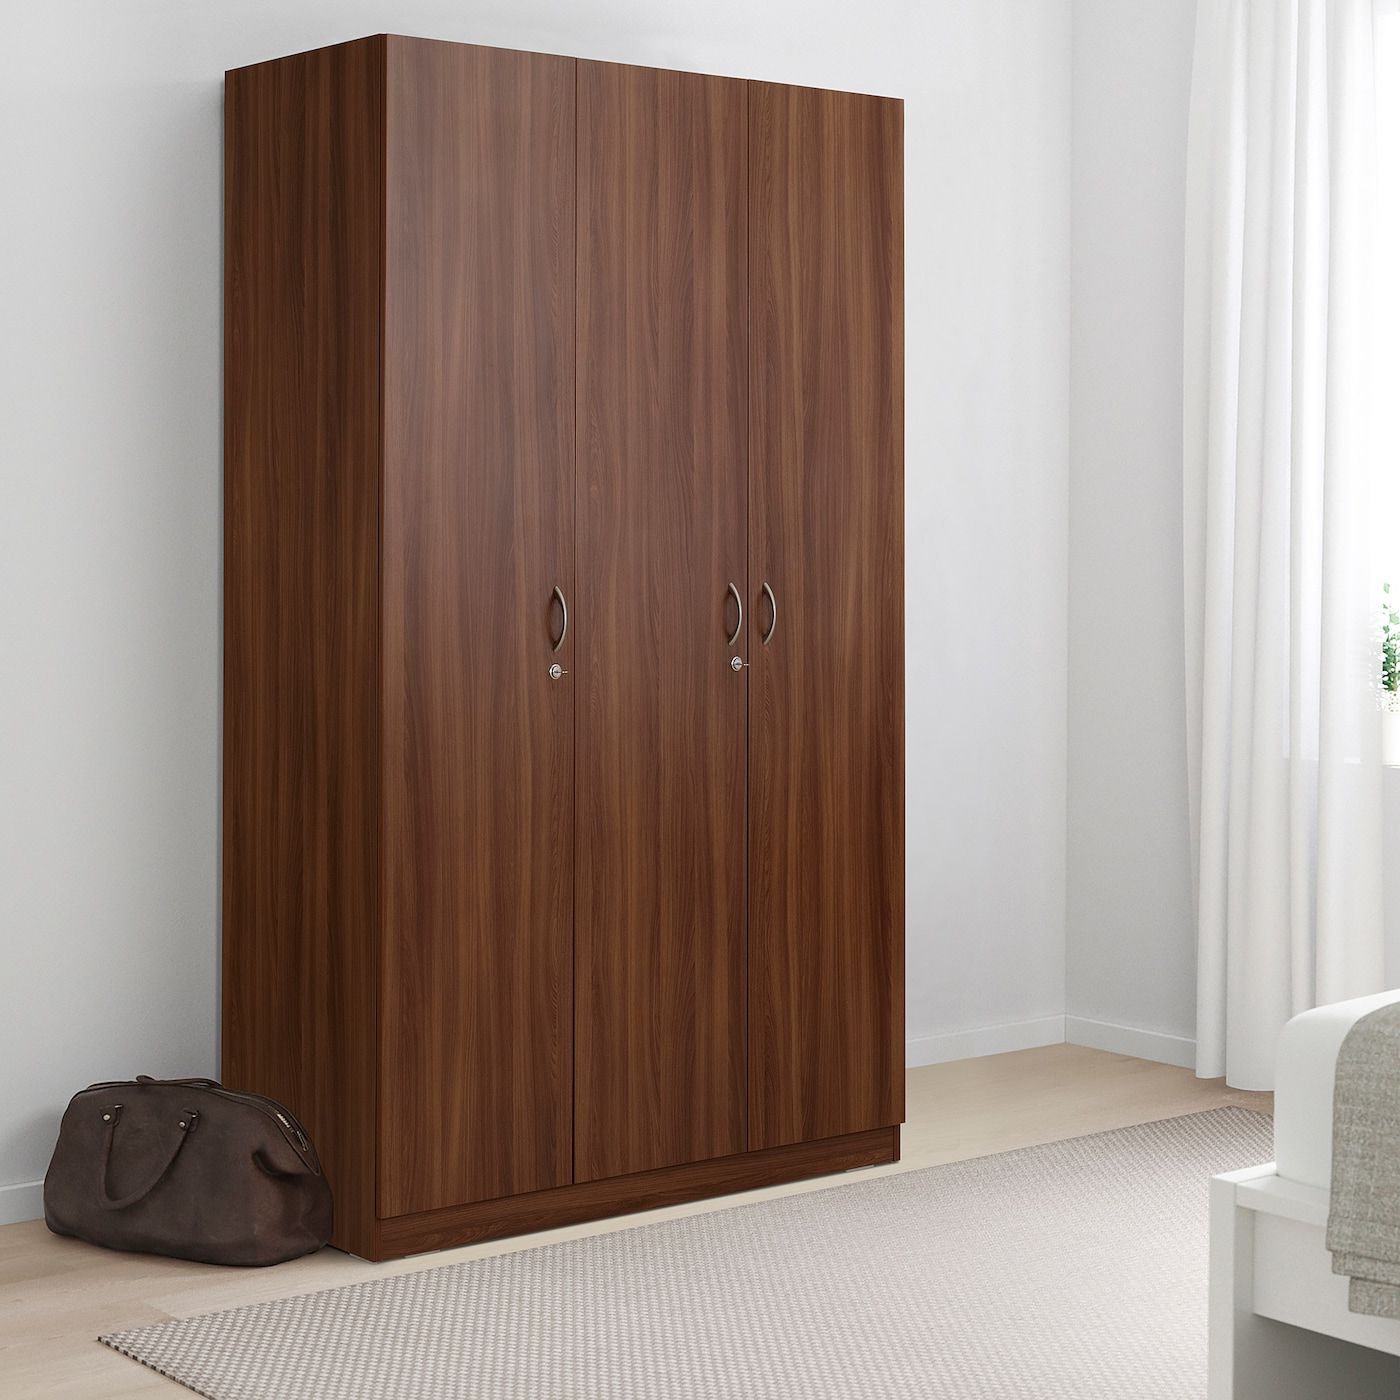 Nodeland Wardrobe With 3 Doors, Medium Brown, 120x52x202 Cm  (471/4x203/8x791/2") – Ikea Regarding Medium Size Wardrobes (Gallery 9 of 20)